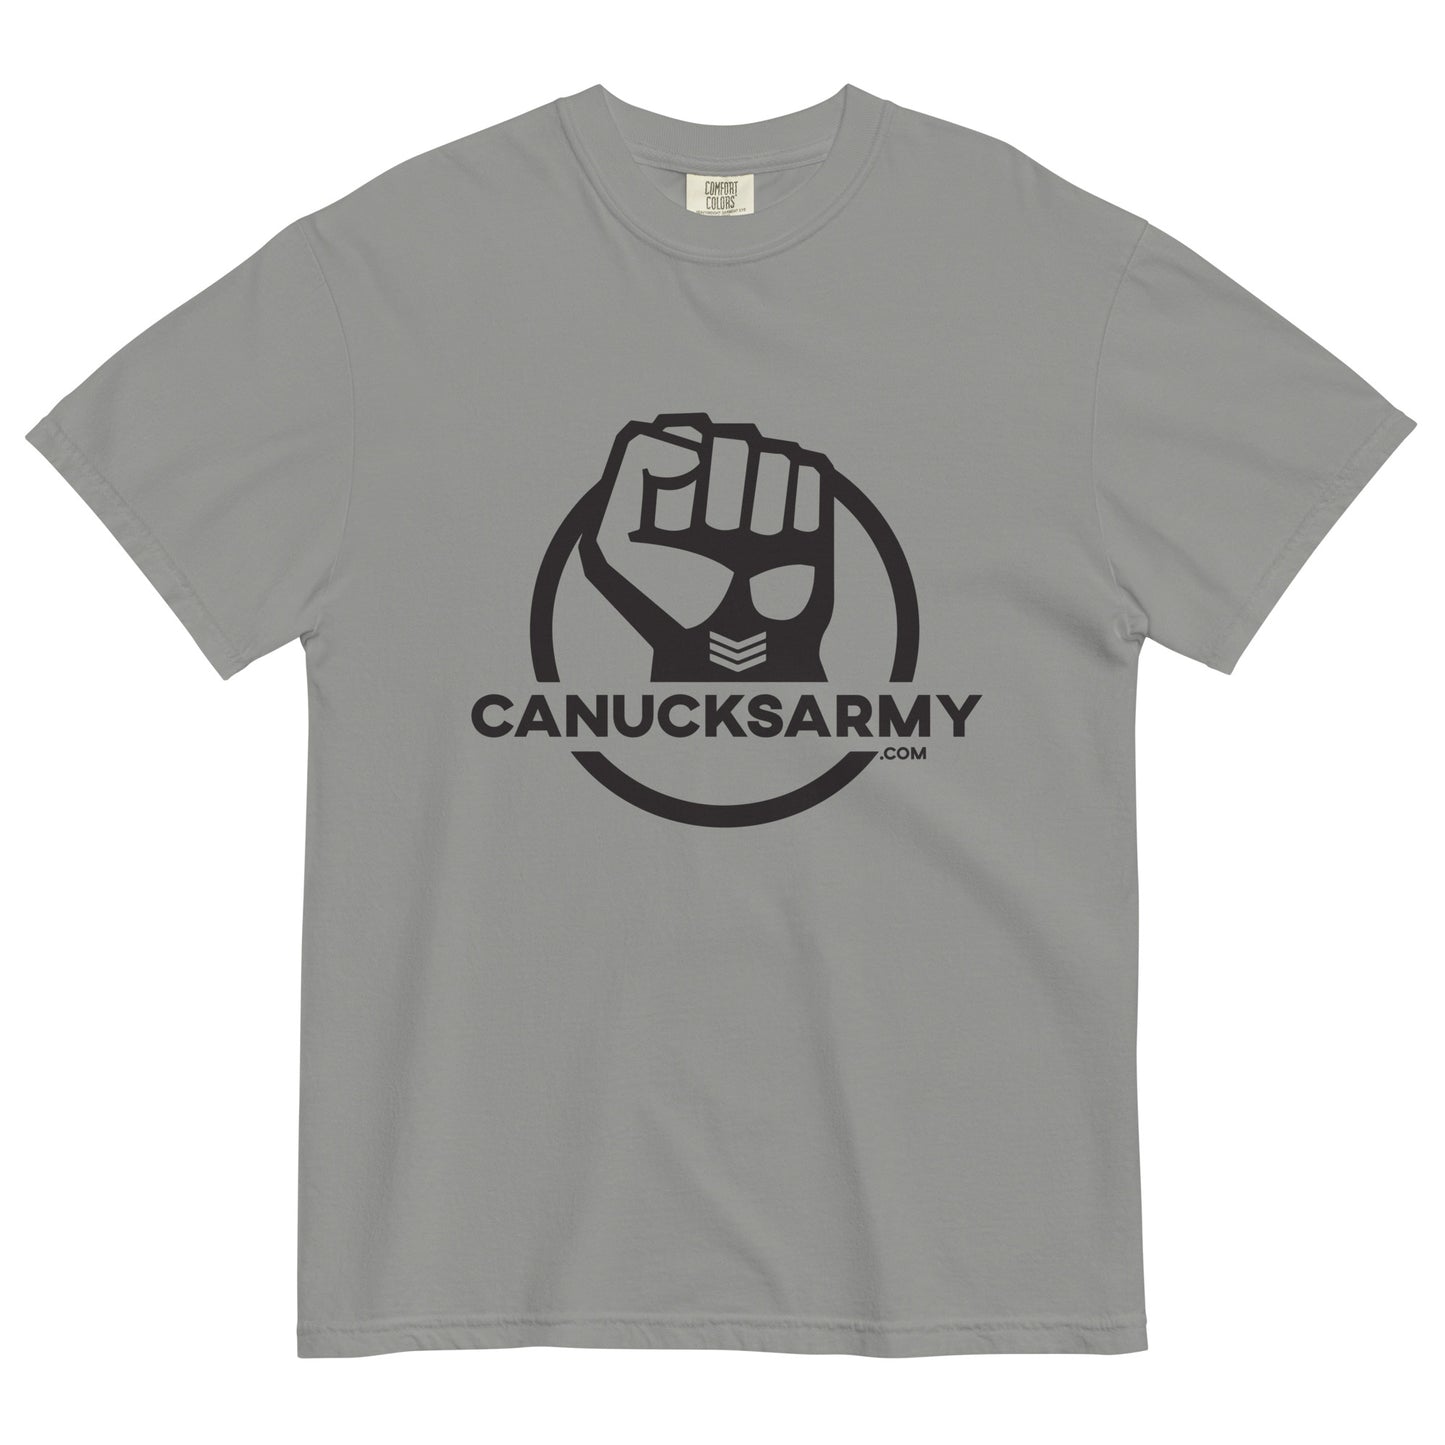 THE CLASSICS - Canucksarmy Full Chest T-Shirt